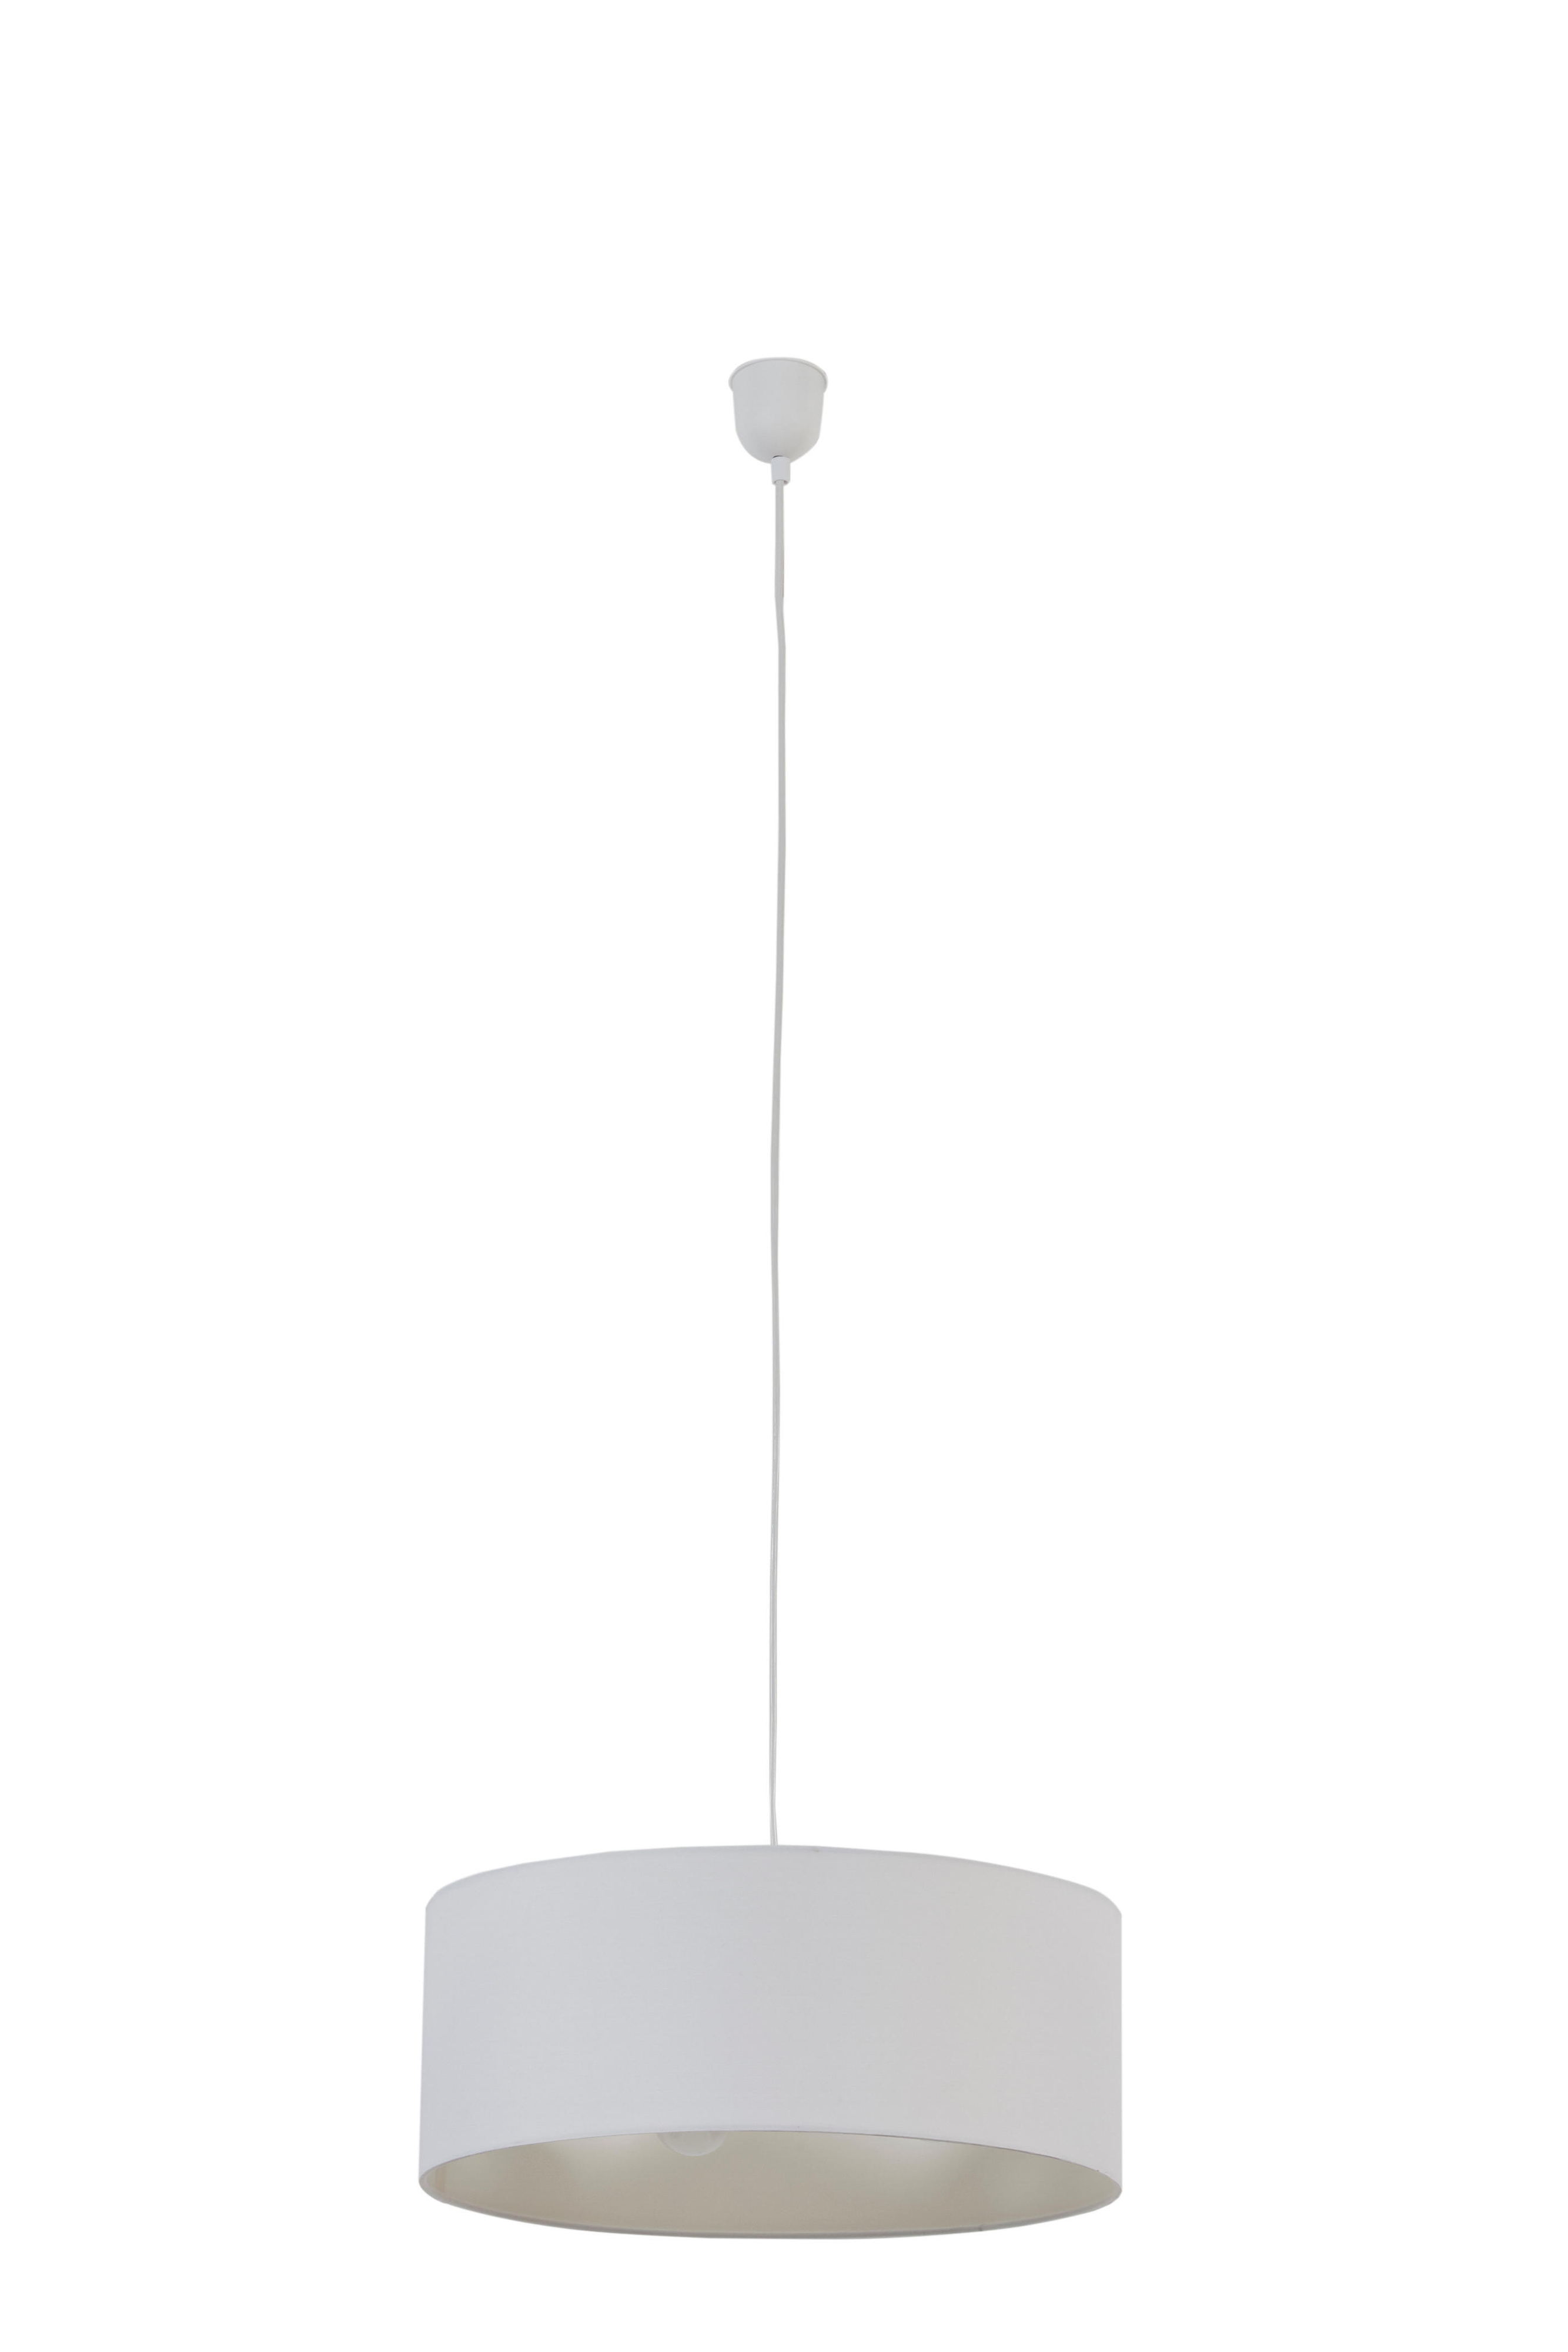 Lampadario Moderno Sitia bianco in tessuto, D. 48 cm, 3 luci, INSPIRE - 3